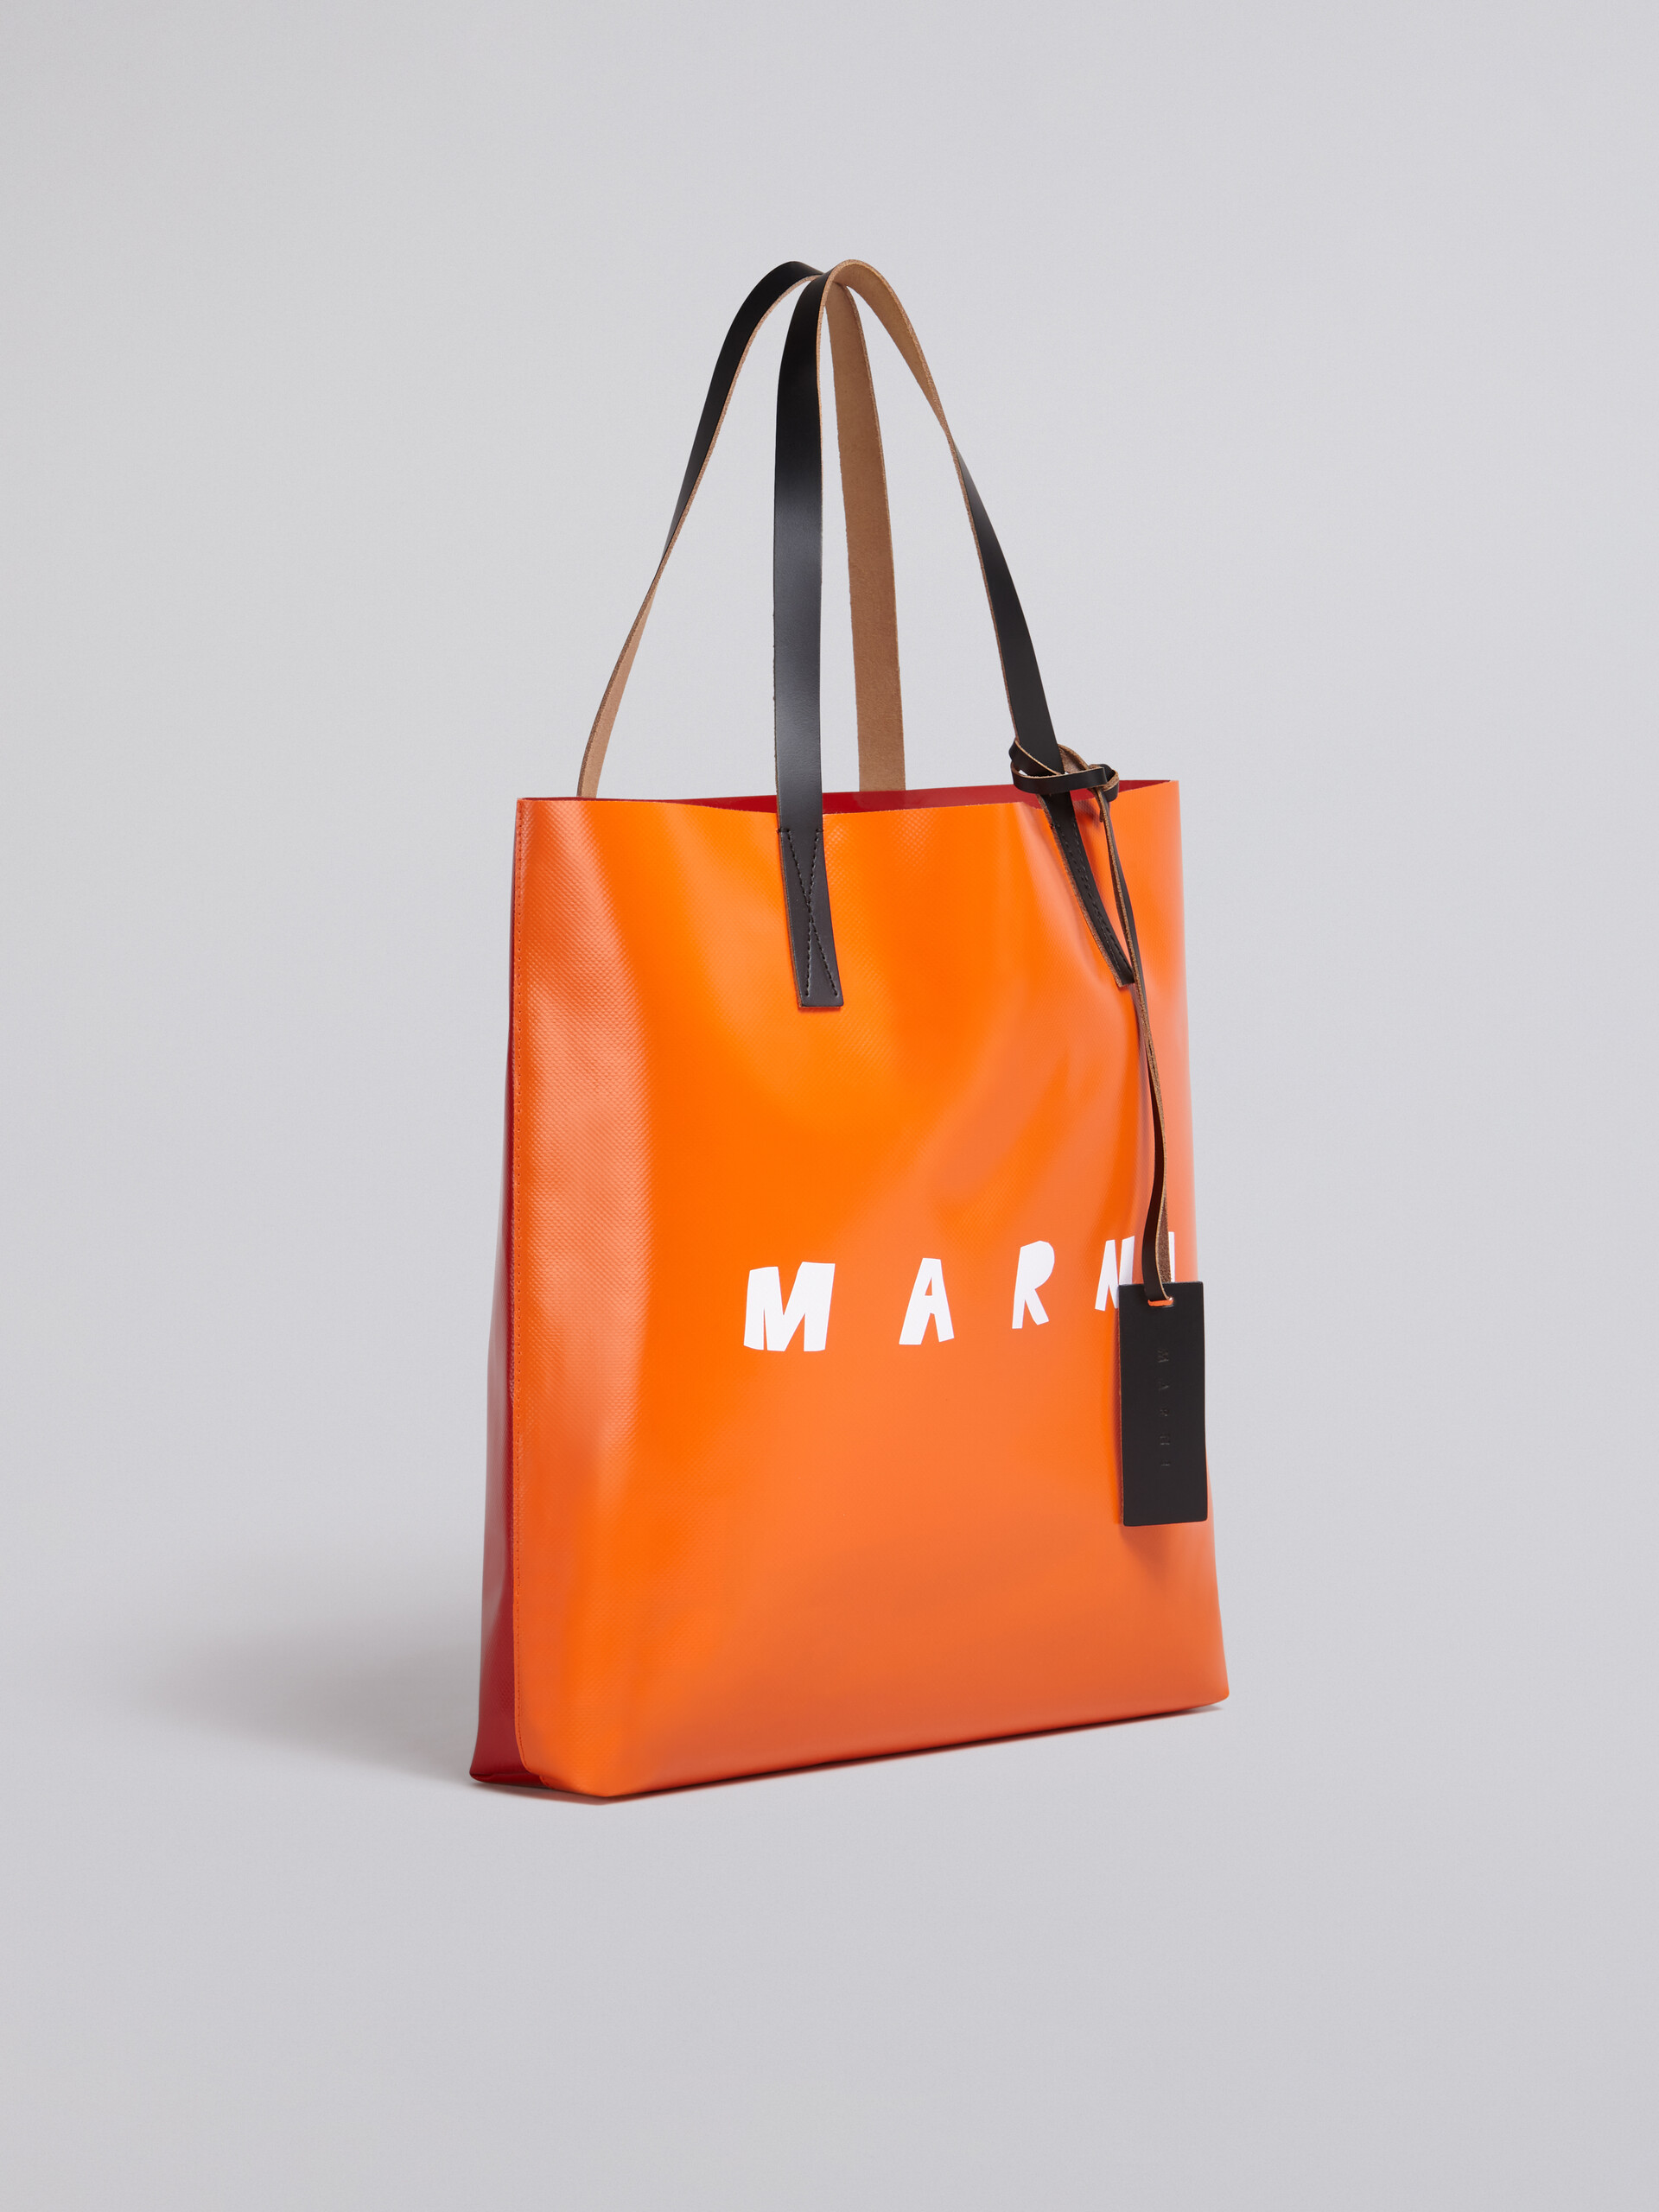 Borsa shopping in PVC con manici in pelle e logo Marni fuxia e arancione - Borse shopping - Image 5